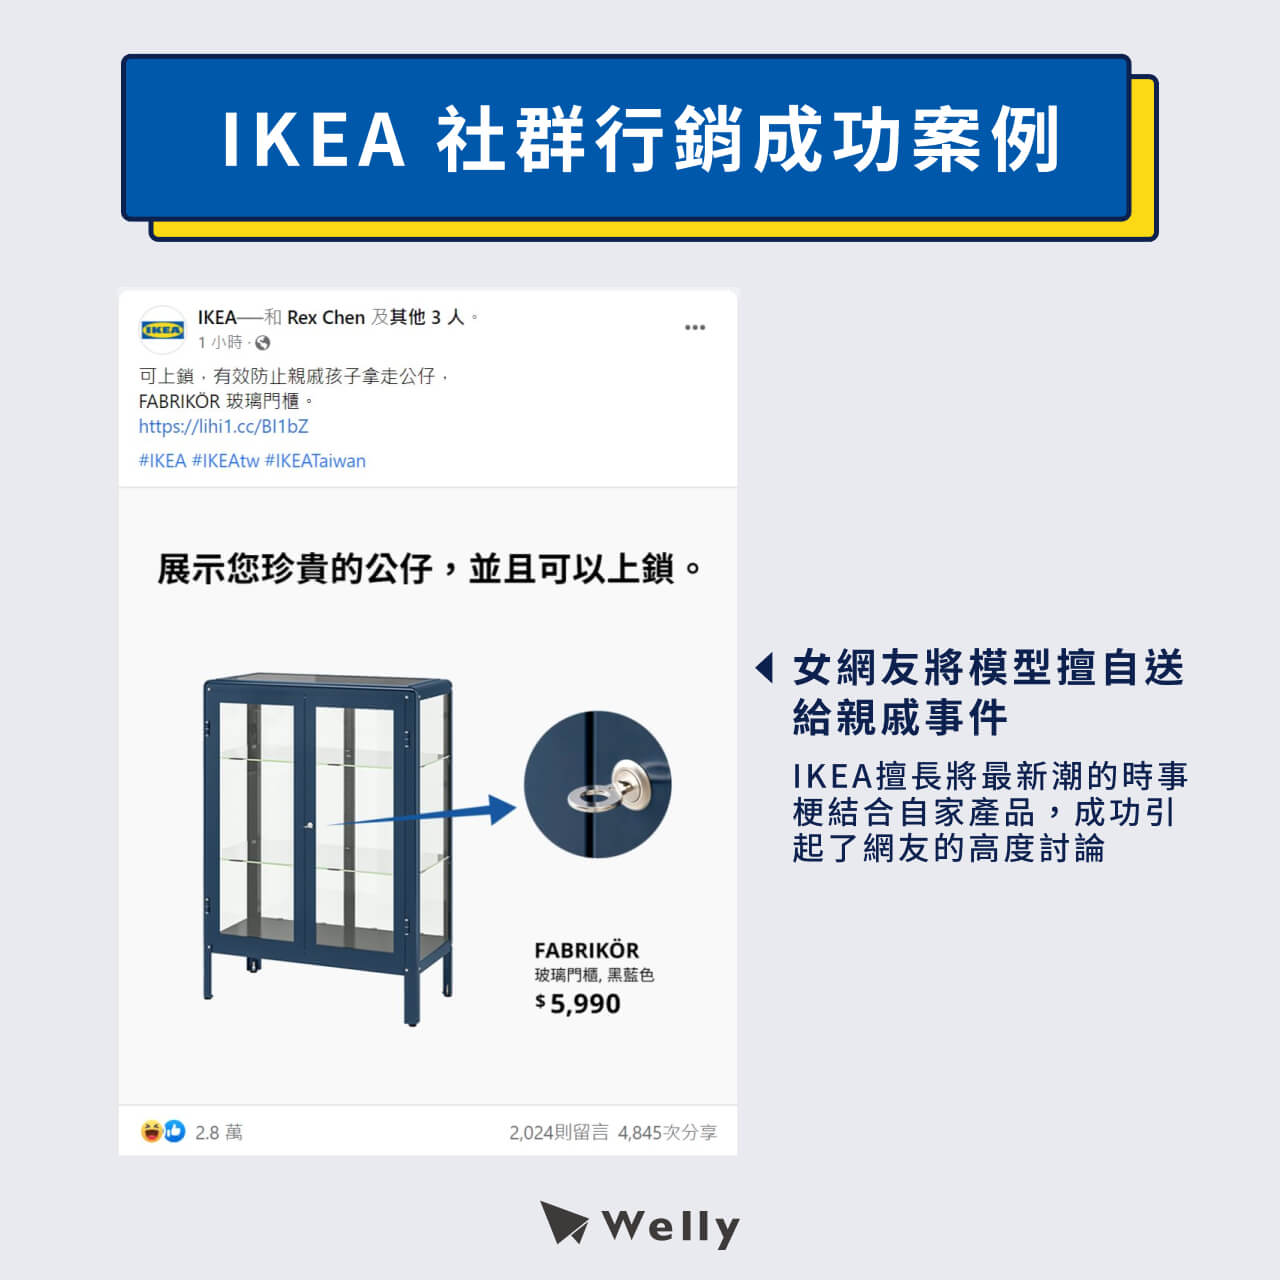 IKEA的FB貼文分享